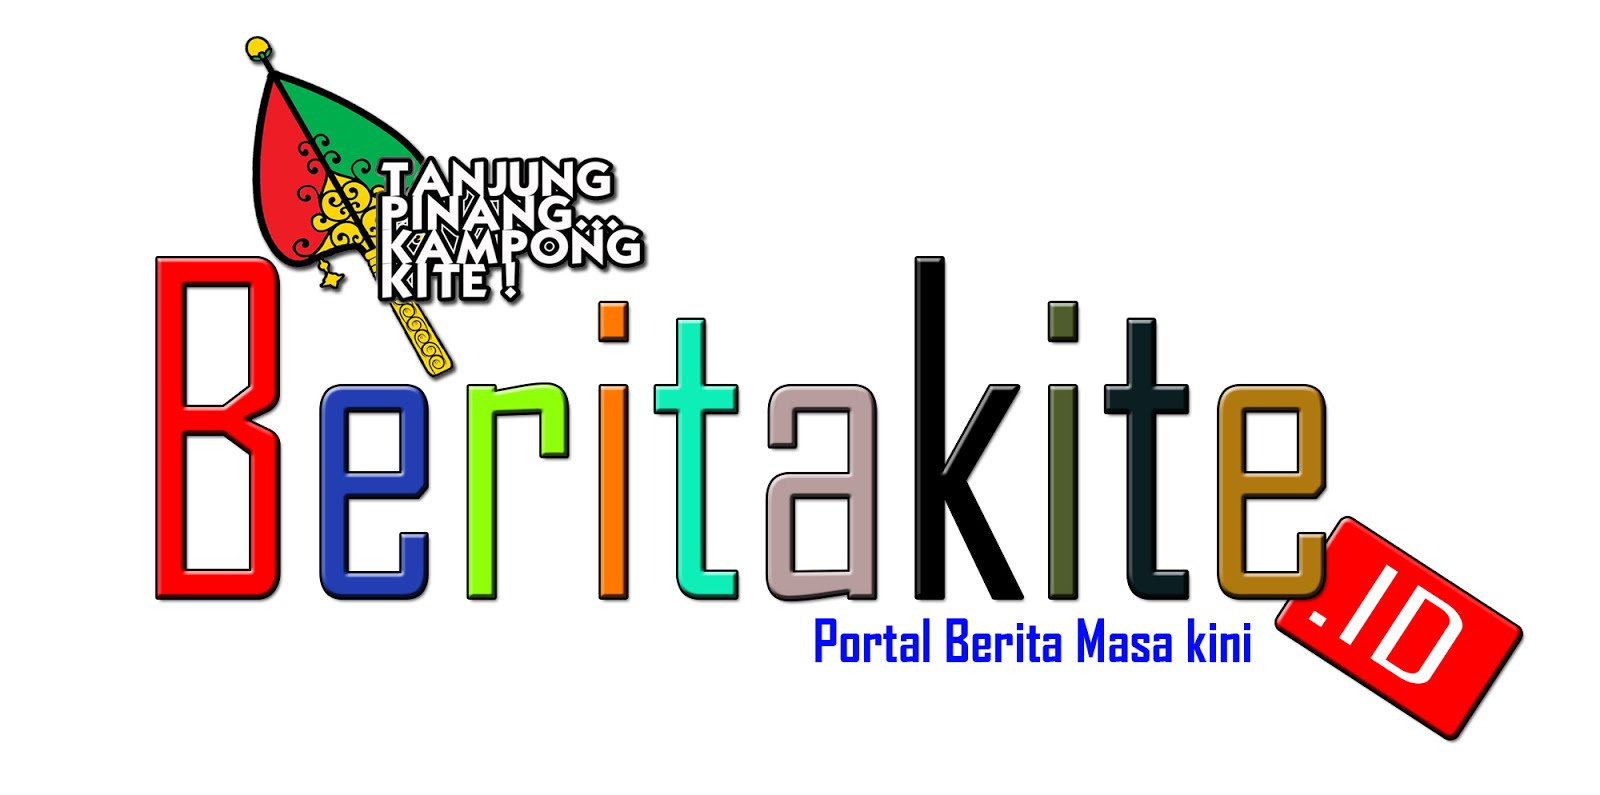 Portal Berita Kite